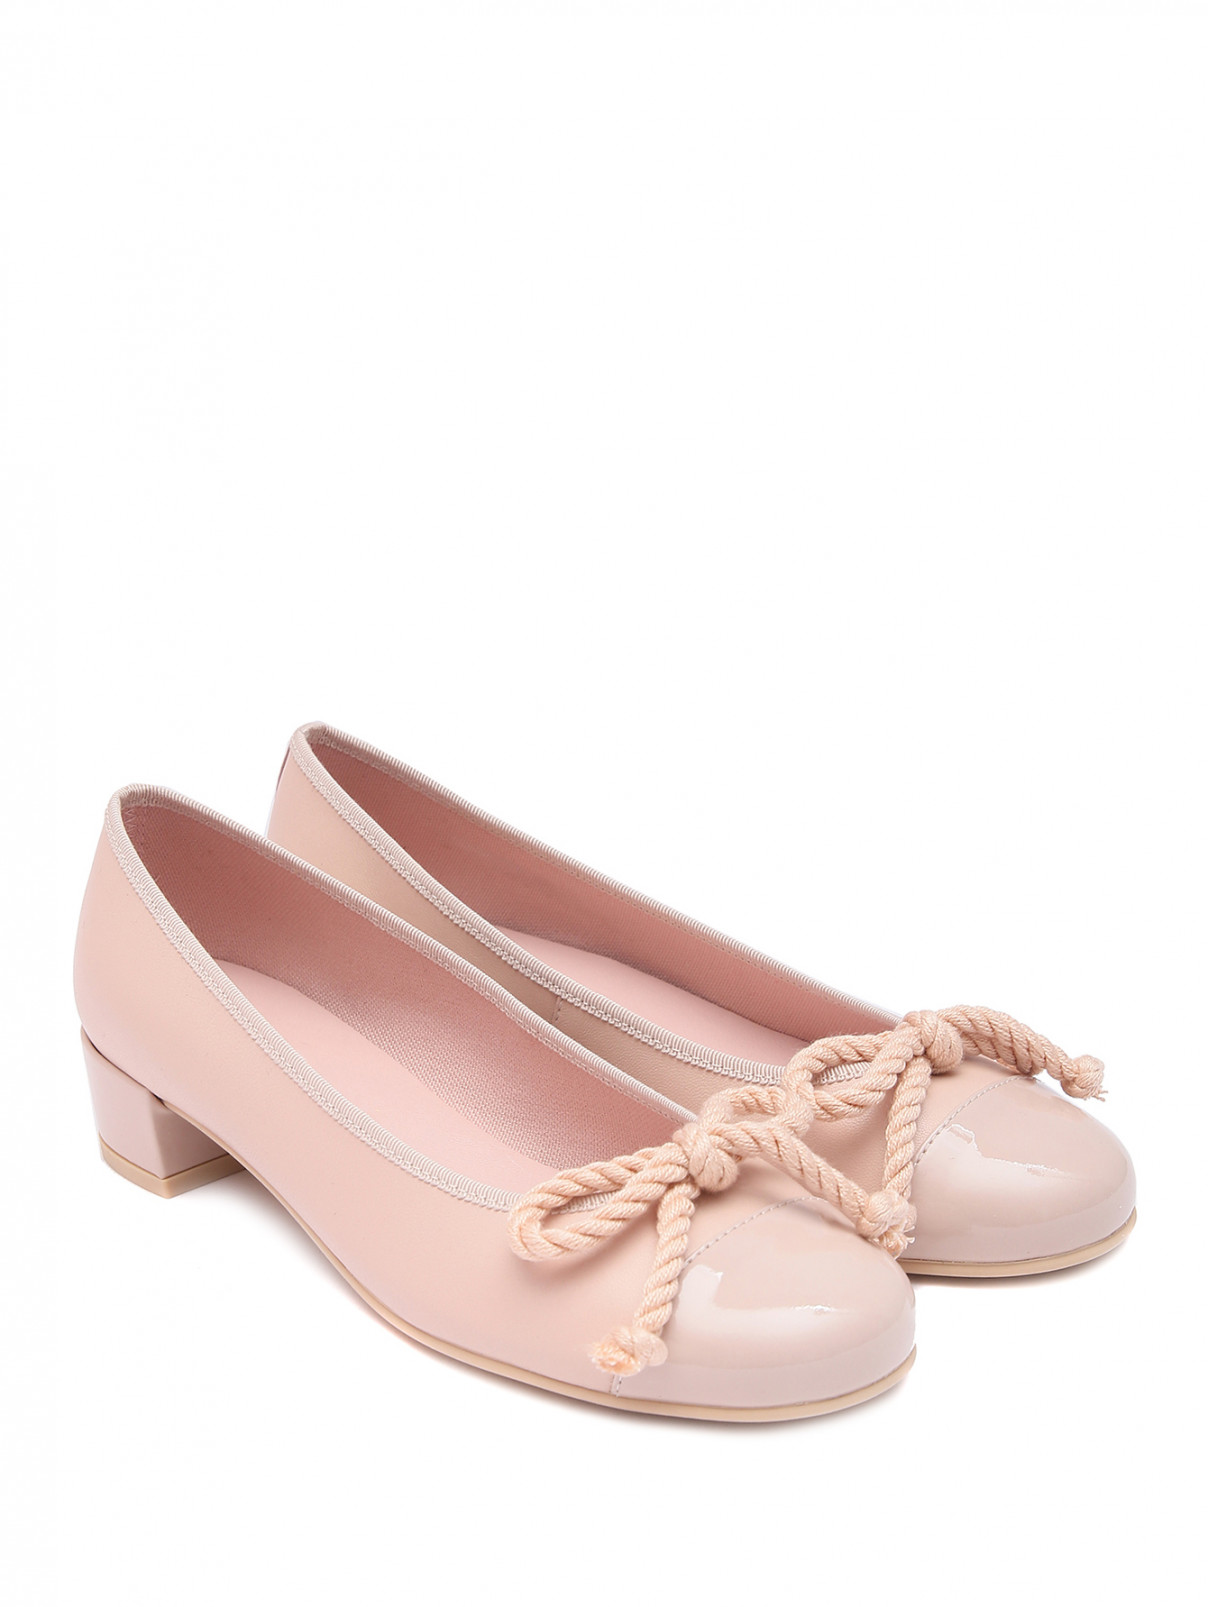 Туфли из кожи на устойчивом каблуке Pretty Ballerinas  –  Общий вид  – Цвет:  Бежевый